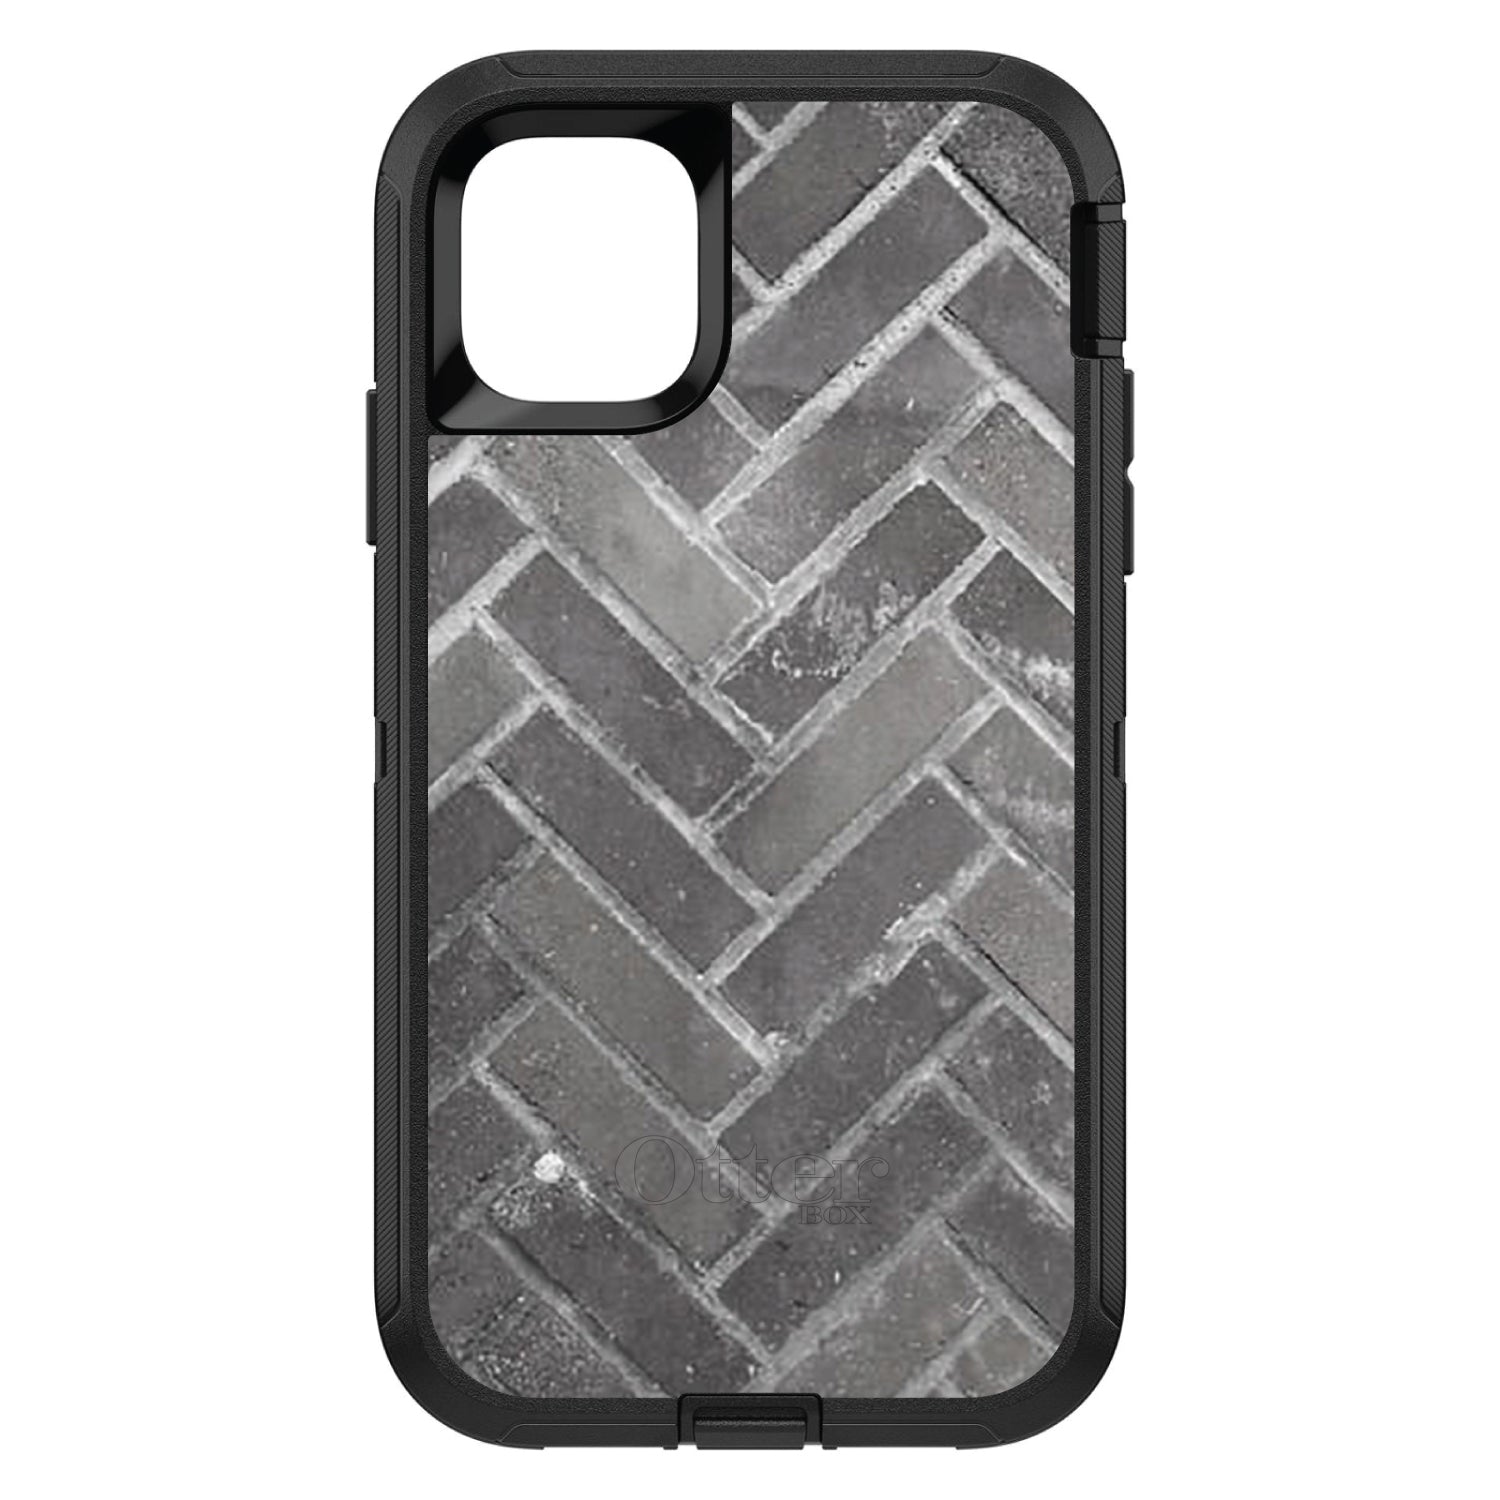 DistinctInk? OtterBox Defender Series Case for Apple iPhone / Samsung Galaxy / Google Pixel - Herringbone Brick Floor